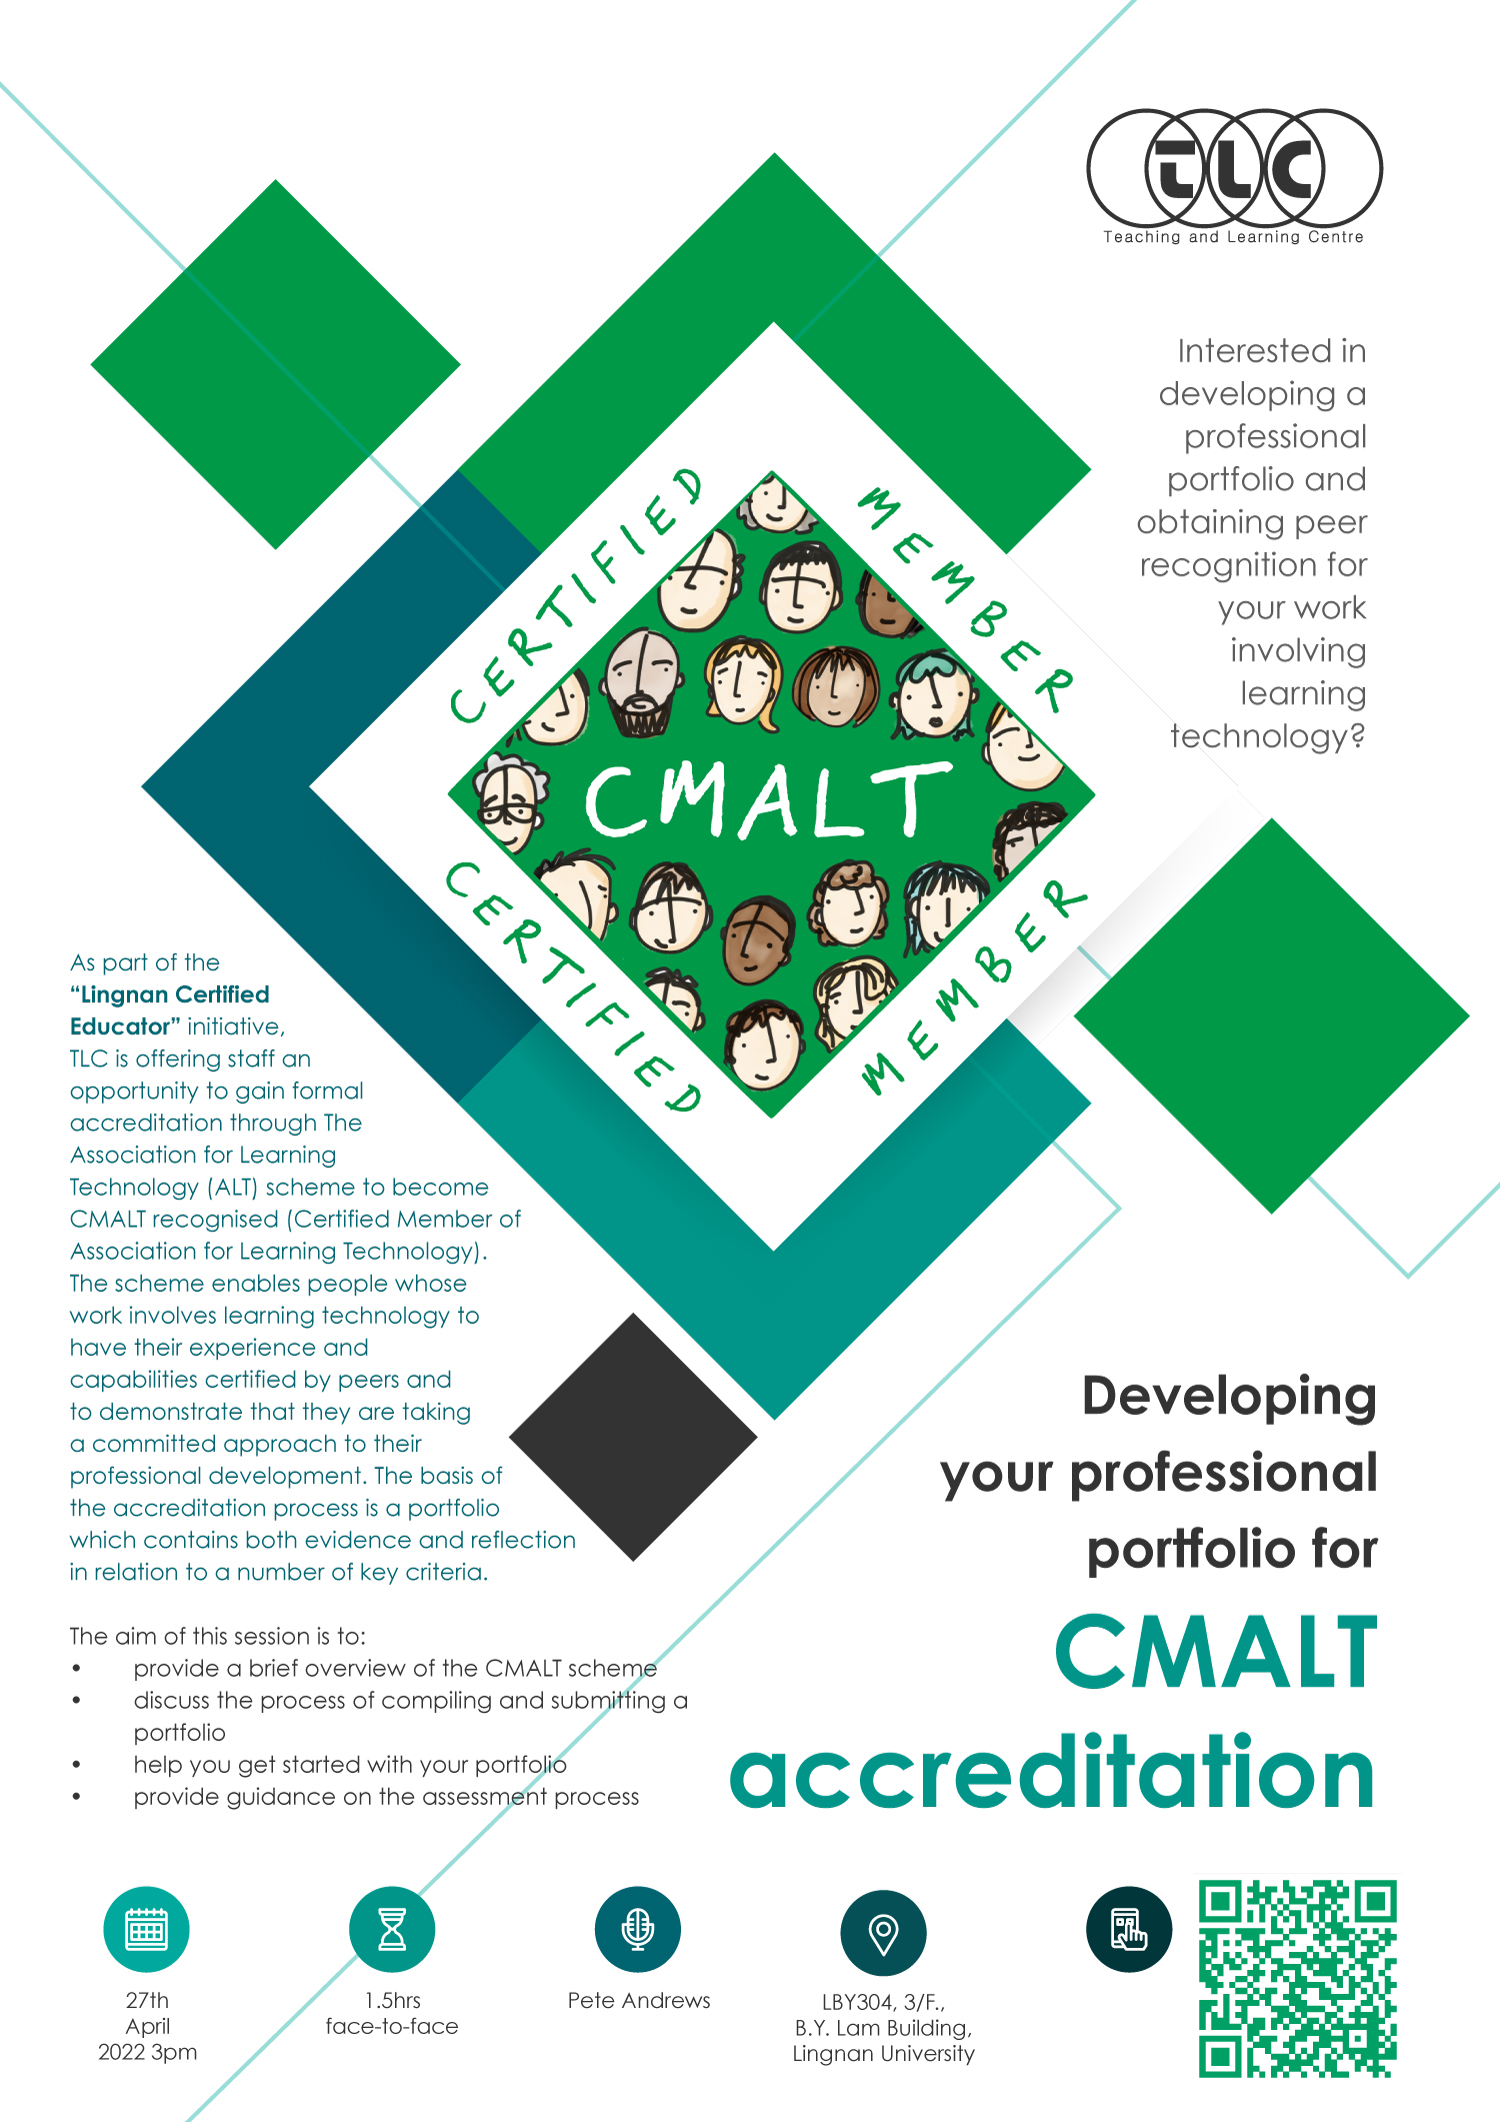 Developing your professional portfolio for CMALT accreditation